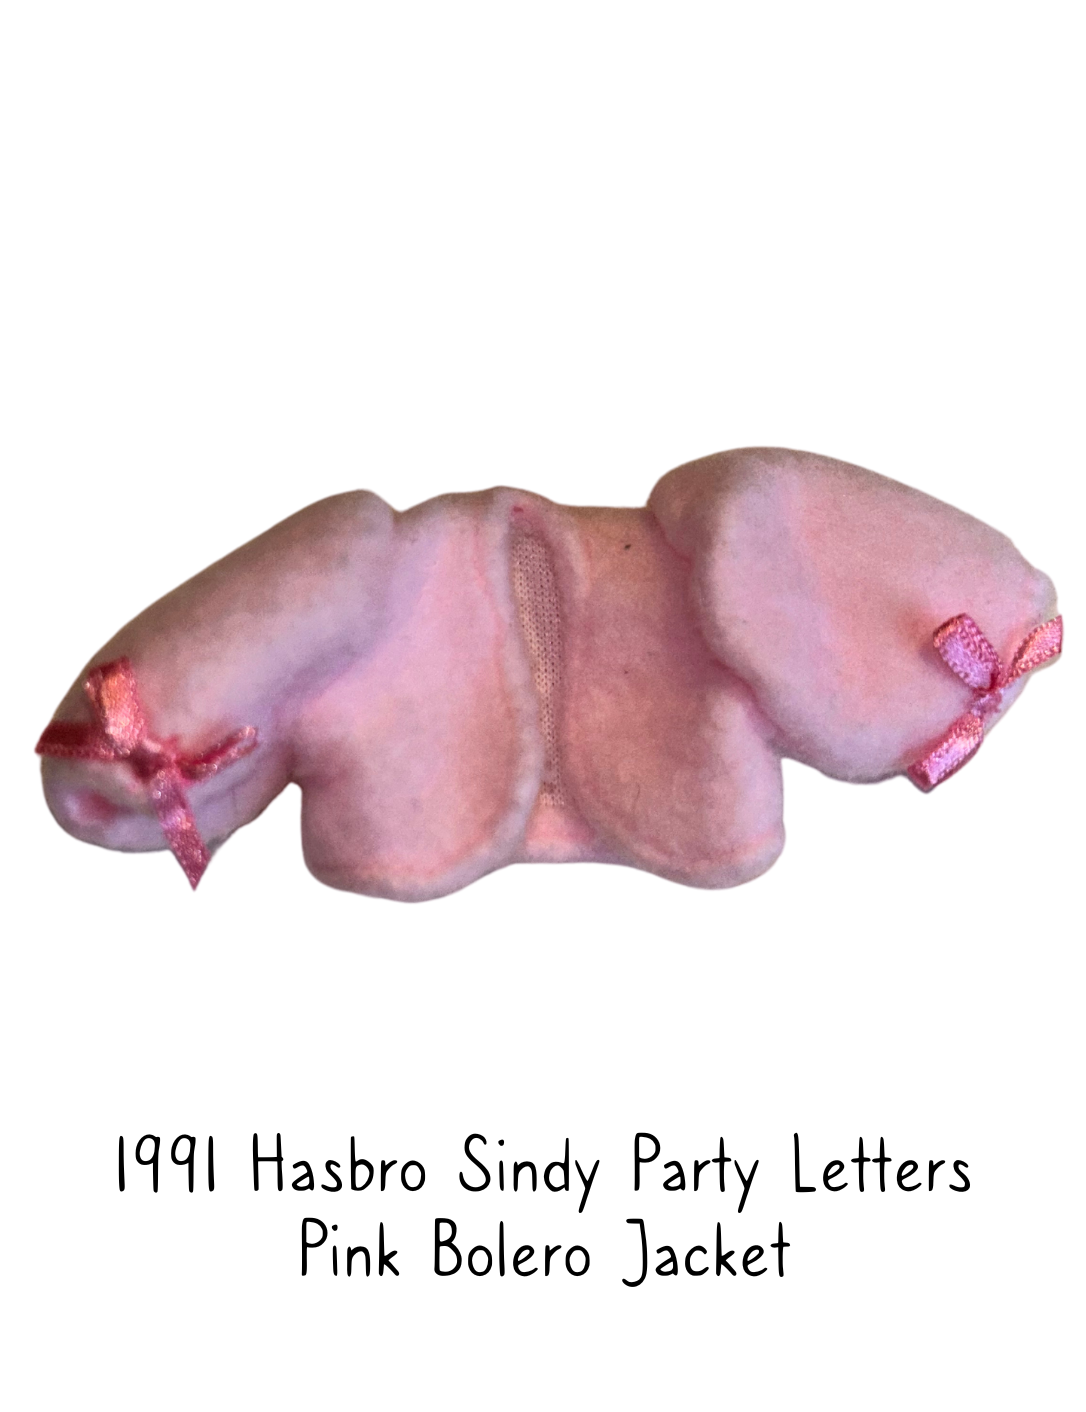 1991 Hasbro Sindy Doll Party Letters Pink Bolero Jacket